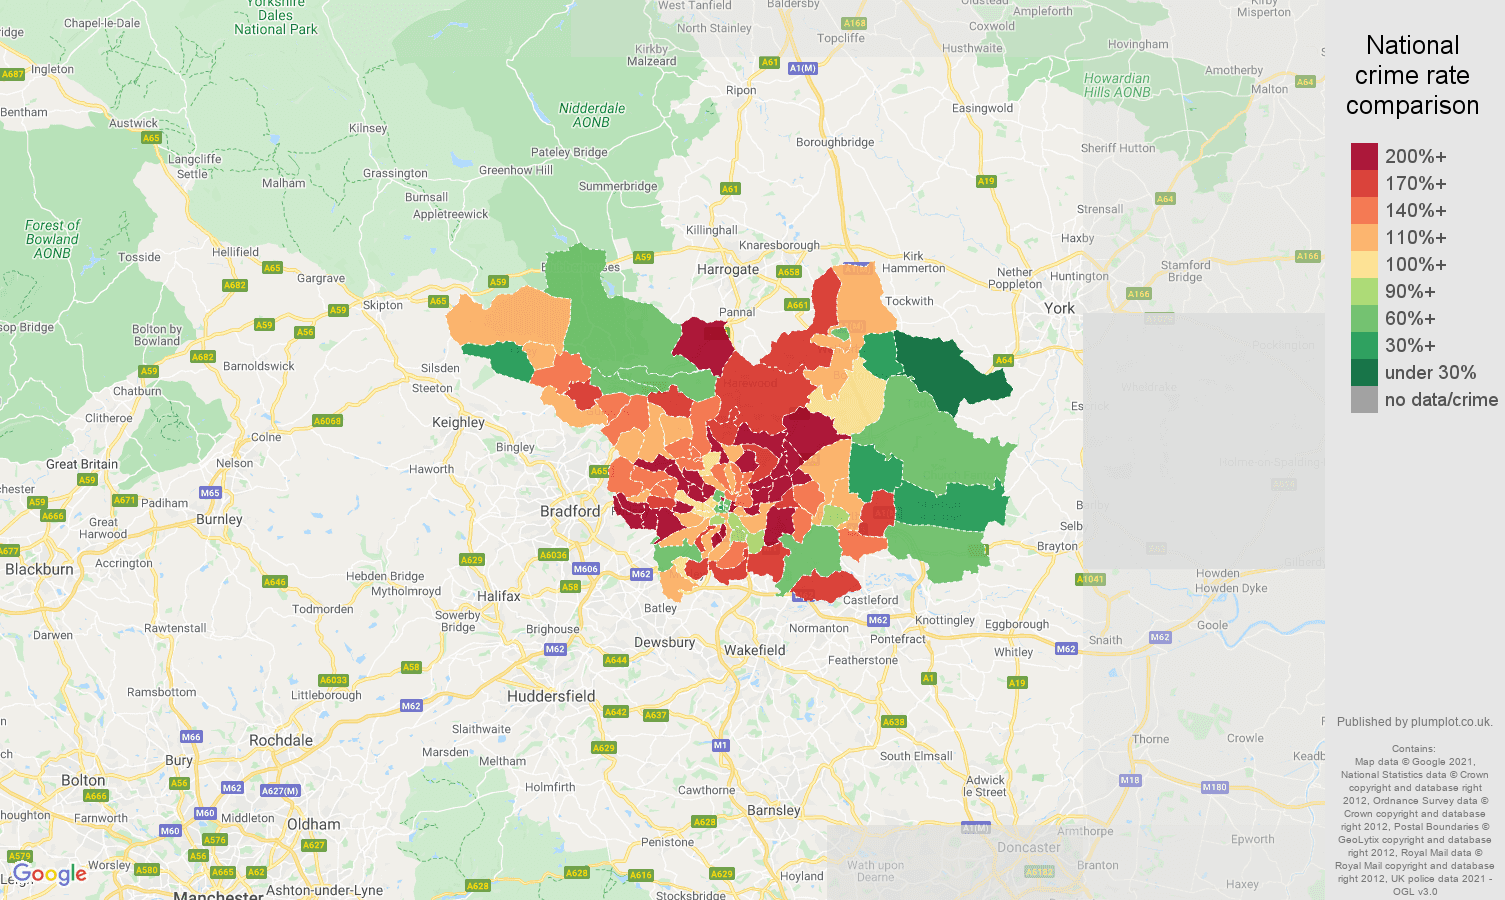 Leeds burglary crime rate comparison map